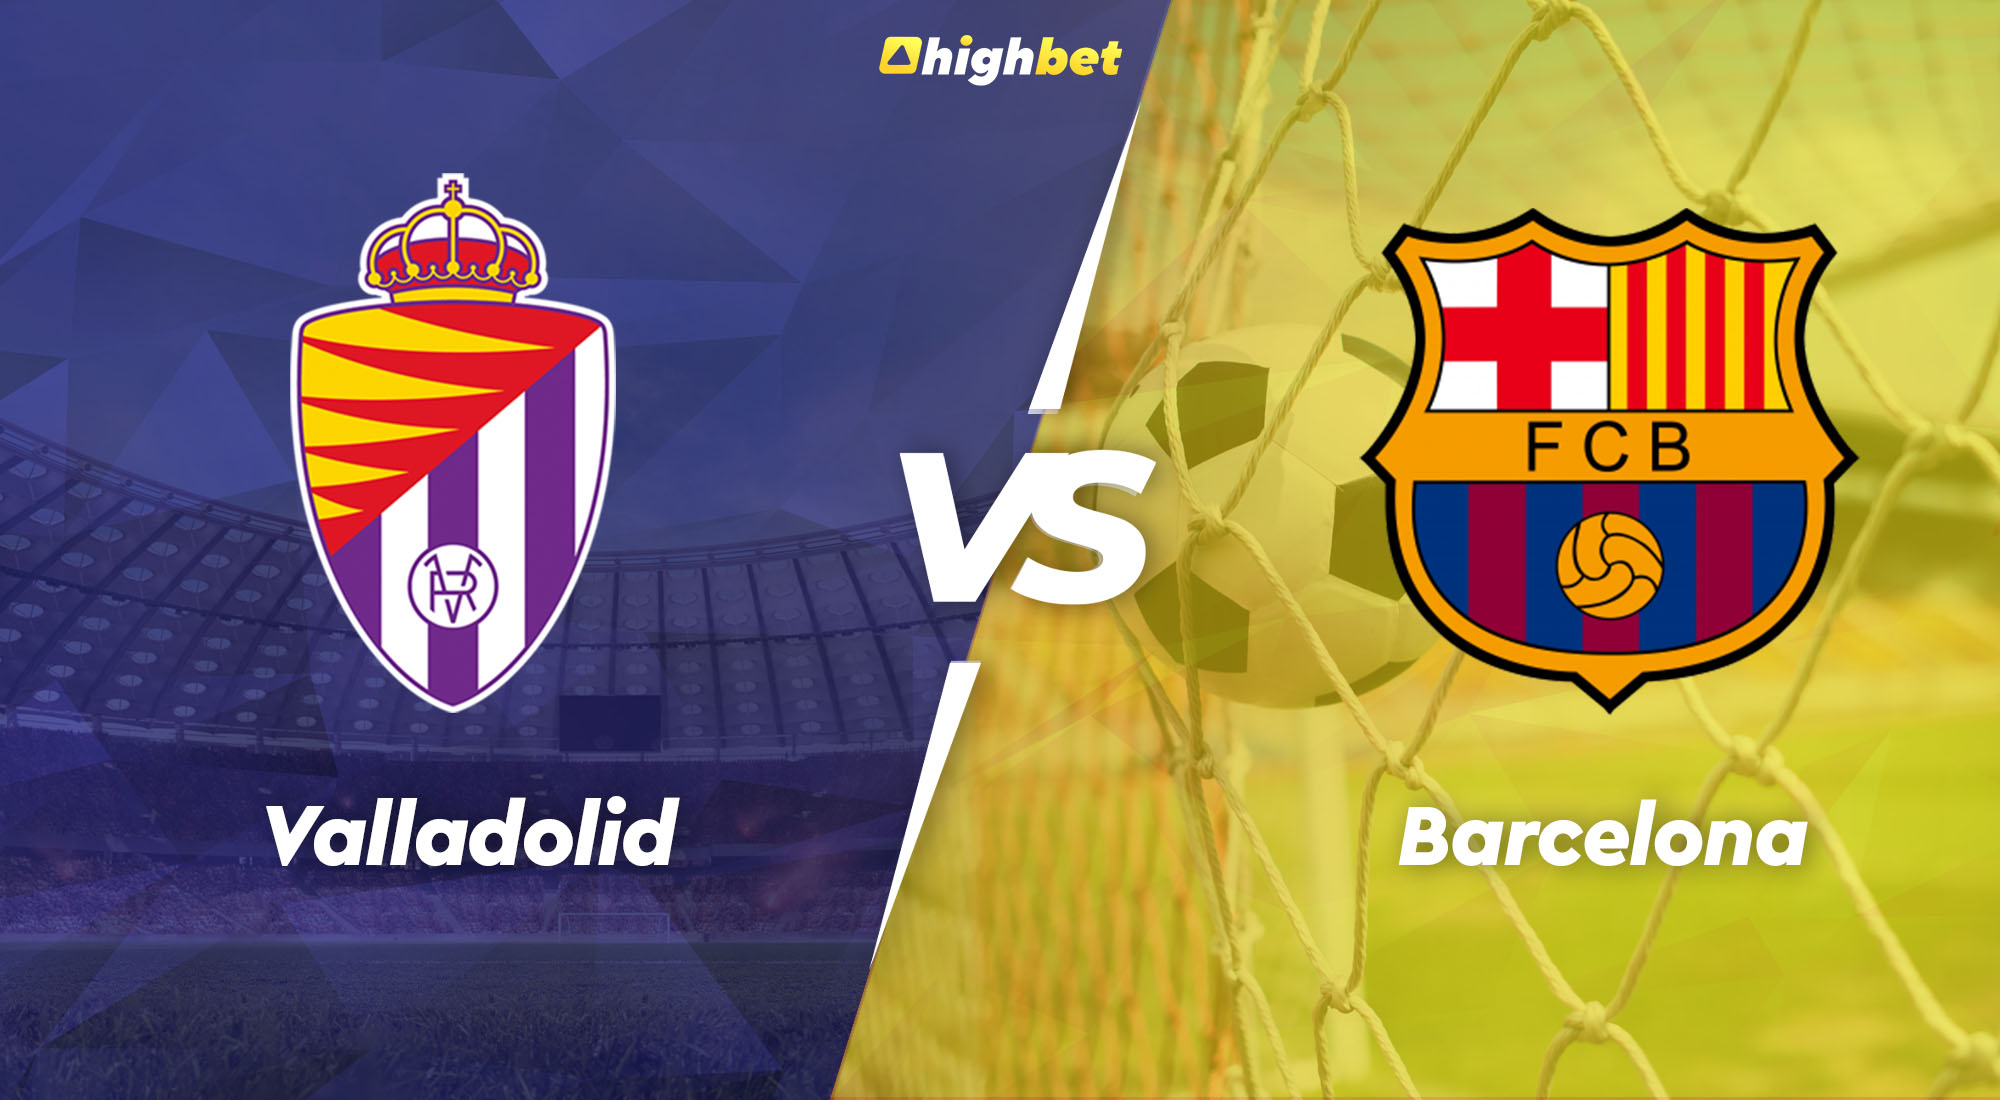 Valladolid vs Barcelona - highbet La Liga Pre-Match Analysis